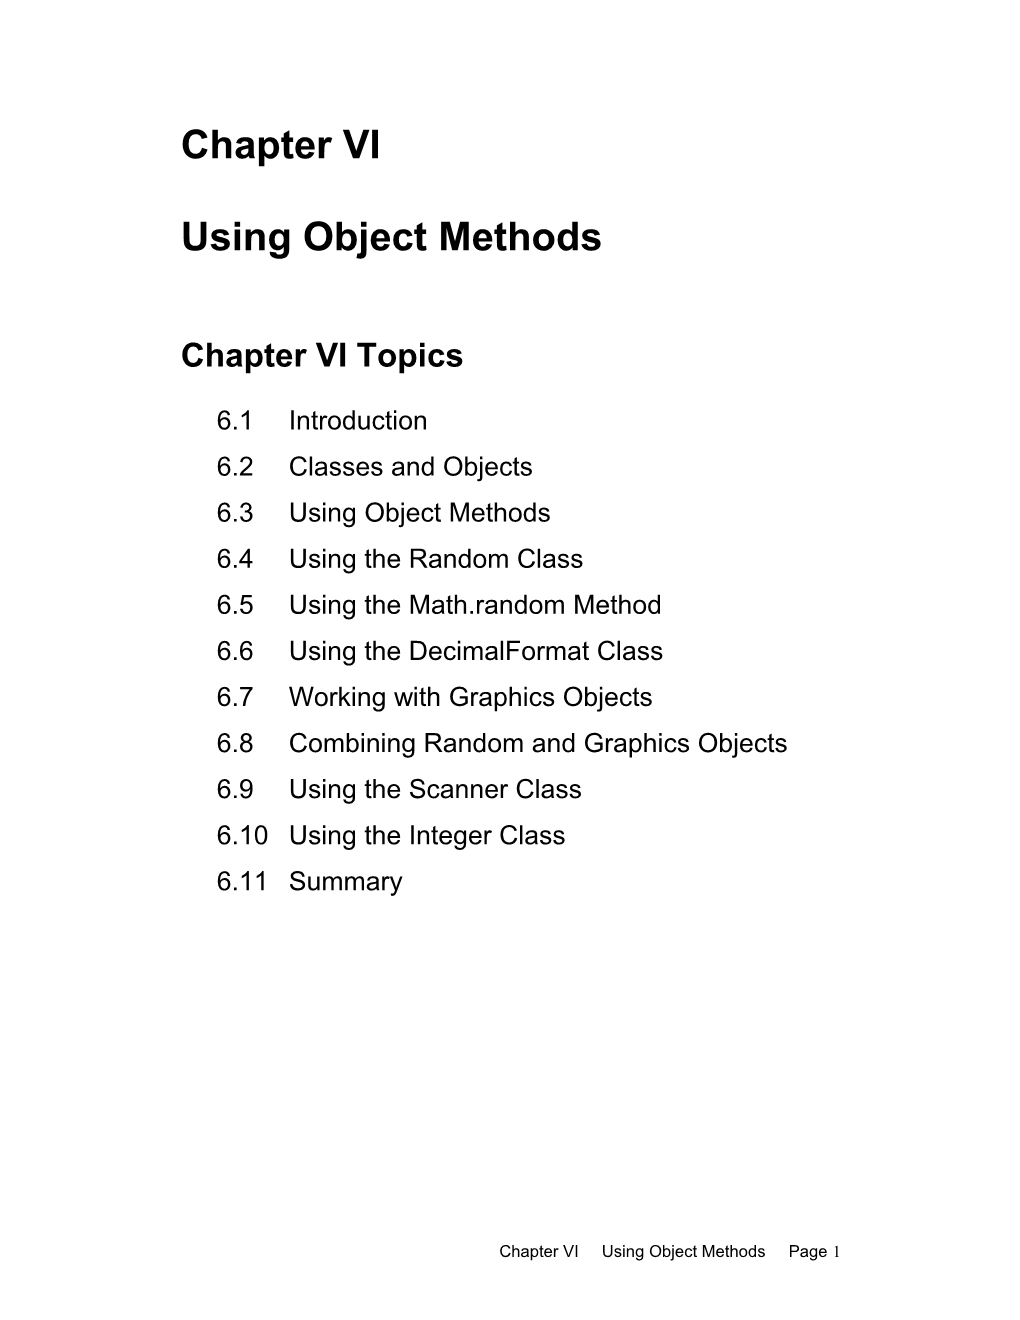 Using Object Methods